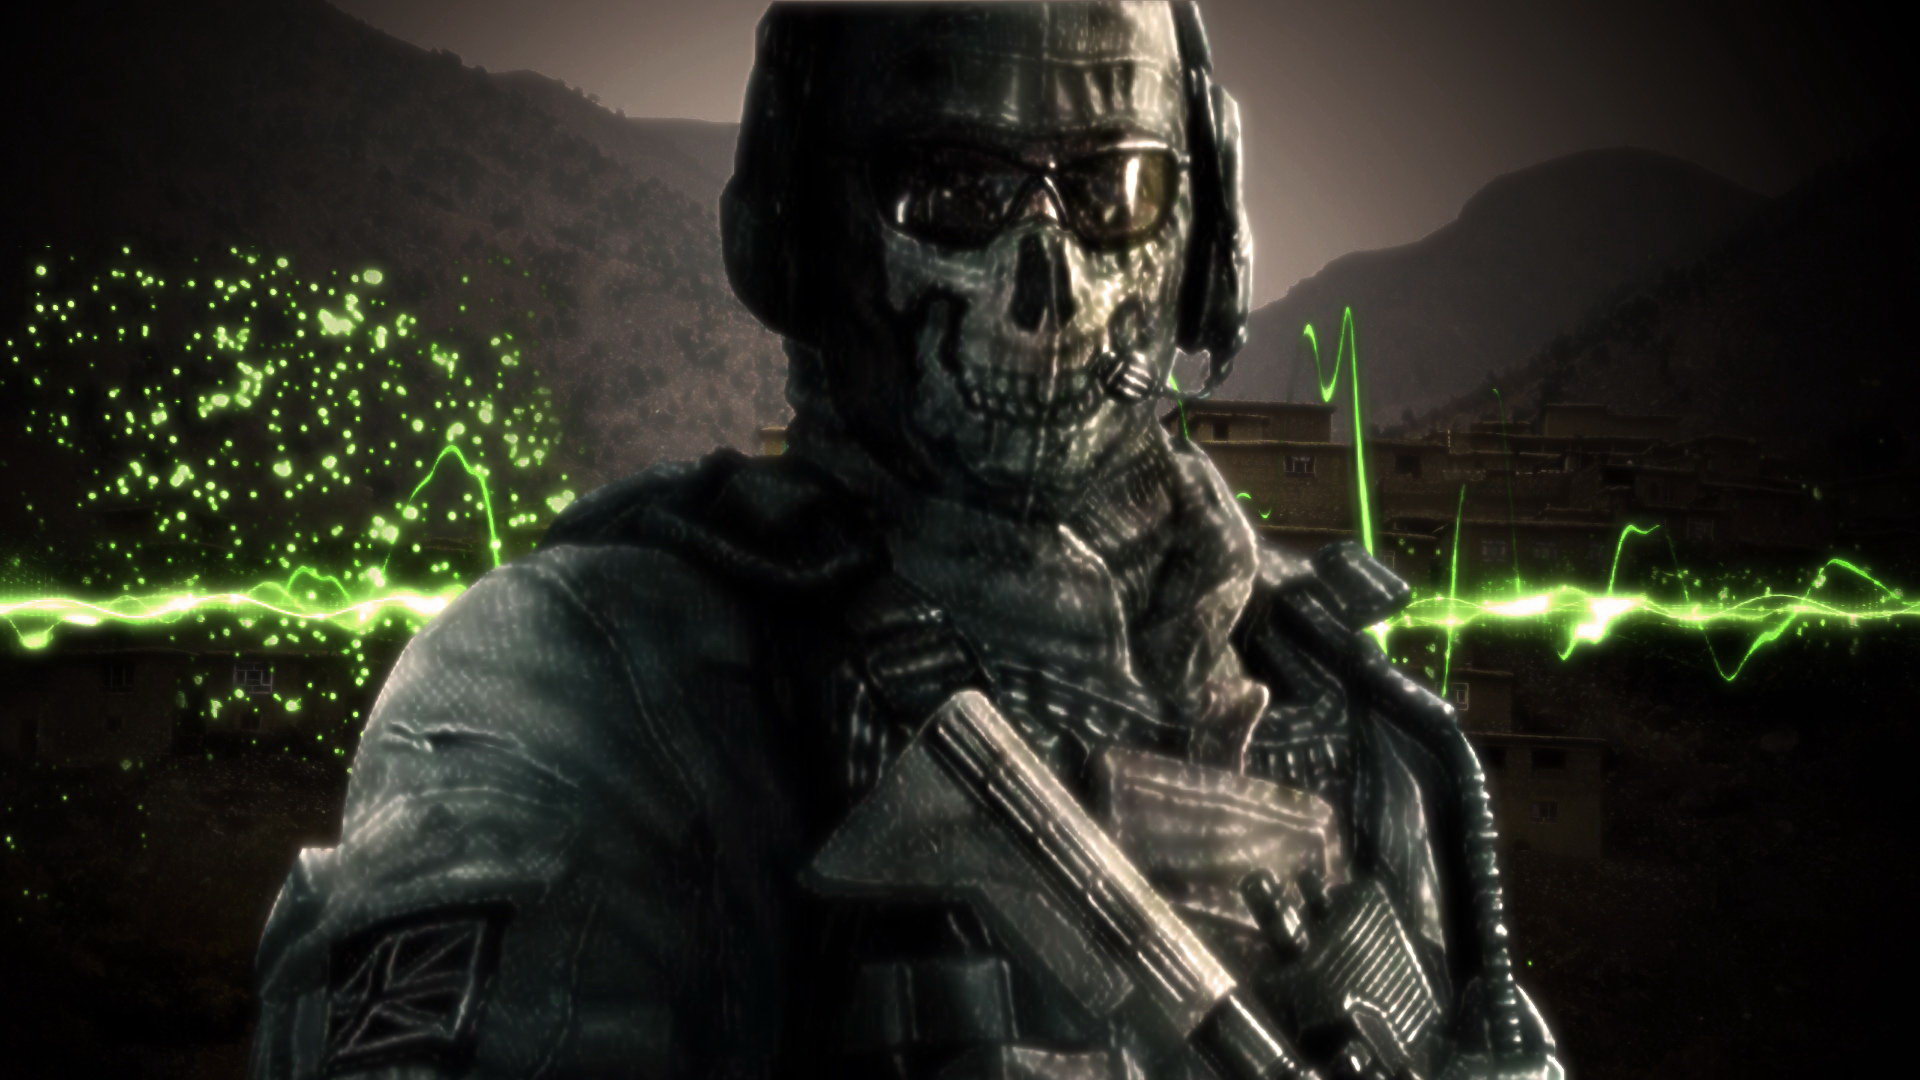 Из какой игры гоуст. Call of Duty Modern Warfare 2 гоуст. Саймон "гоуст" Райли. Ghost Call of Duty Modern Warfare 2. Гоуст из калл оф дьюти.